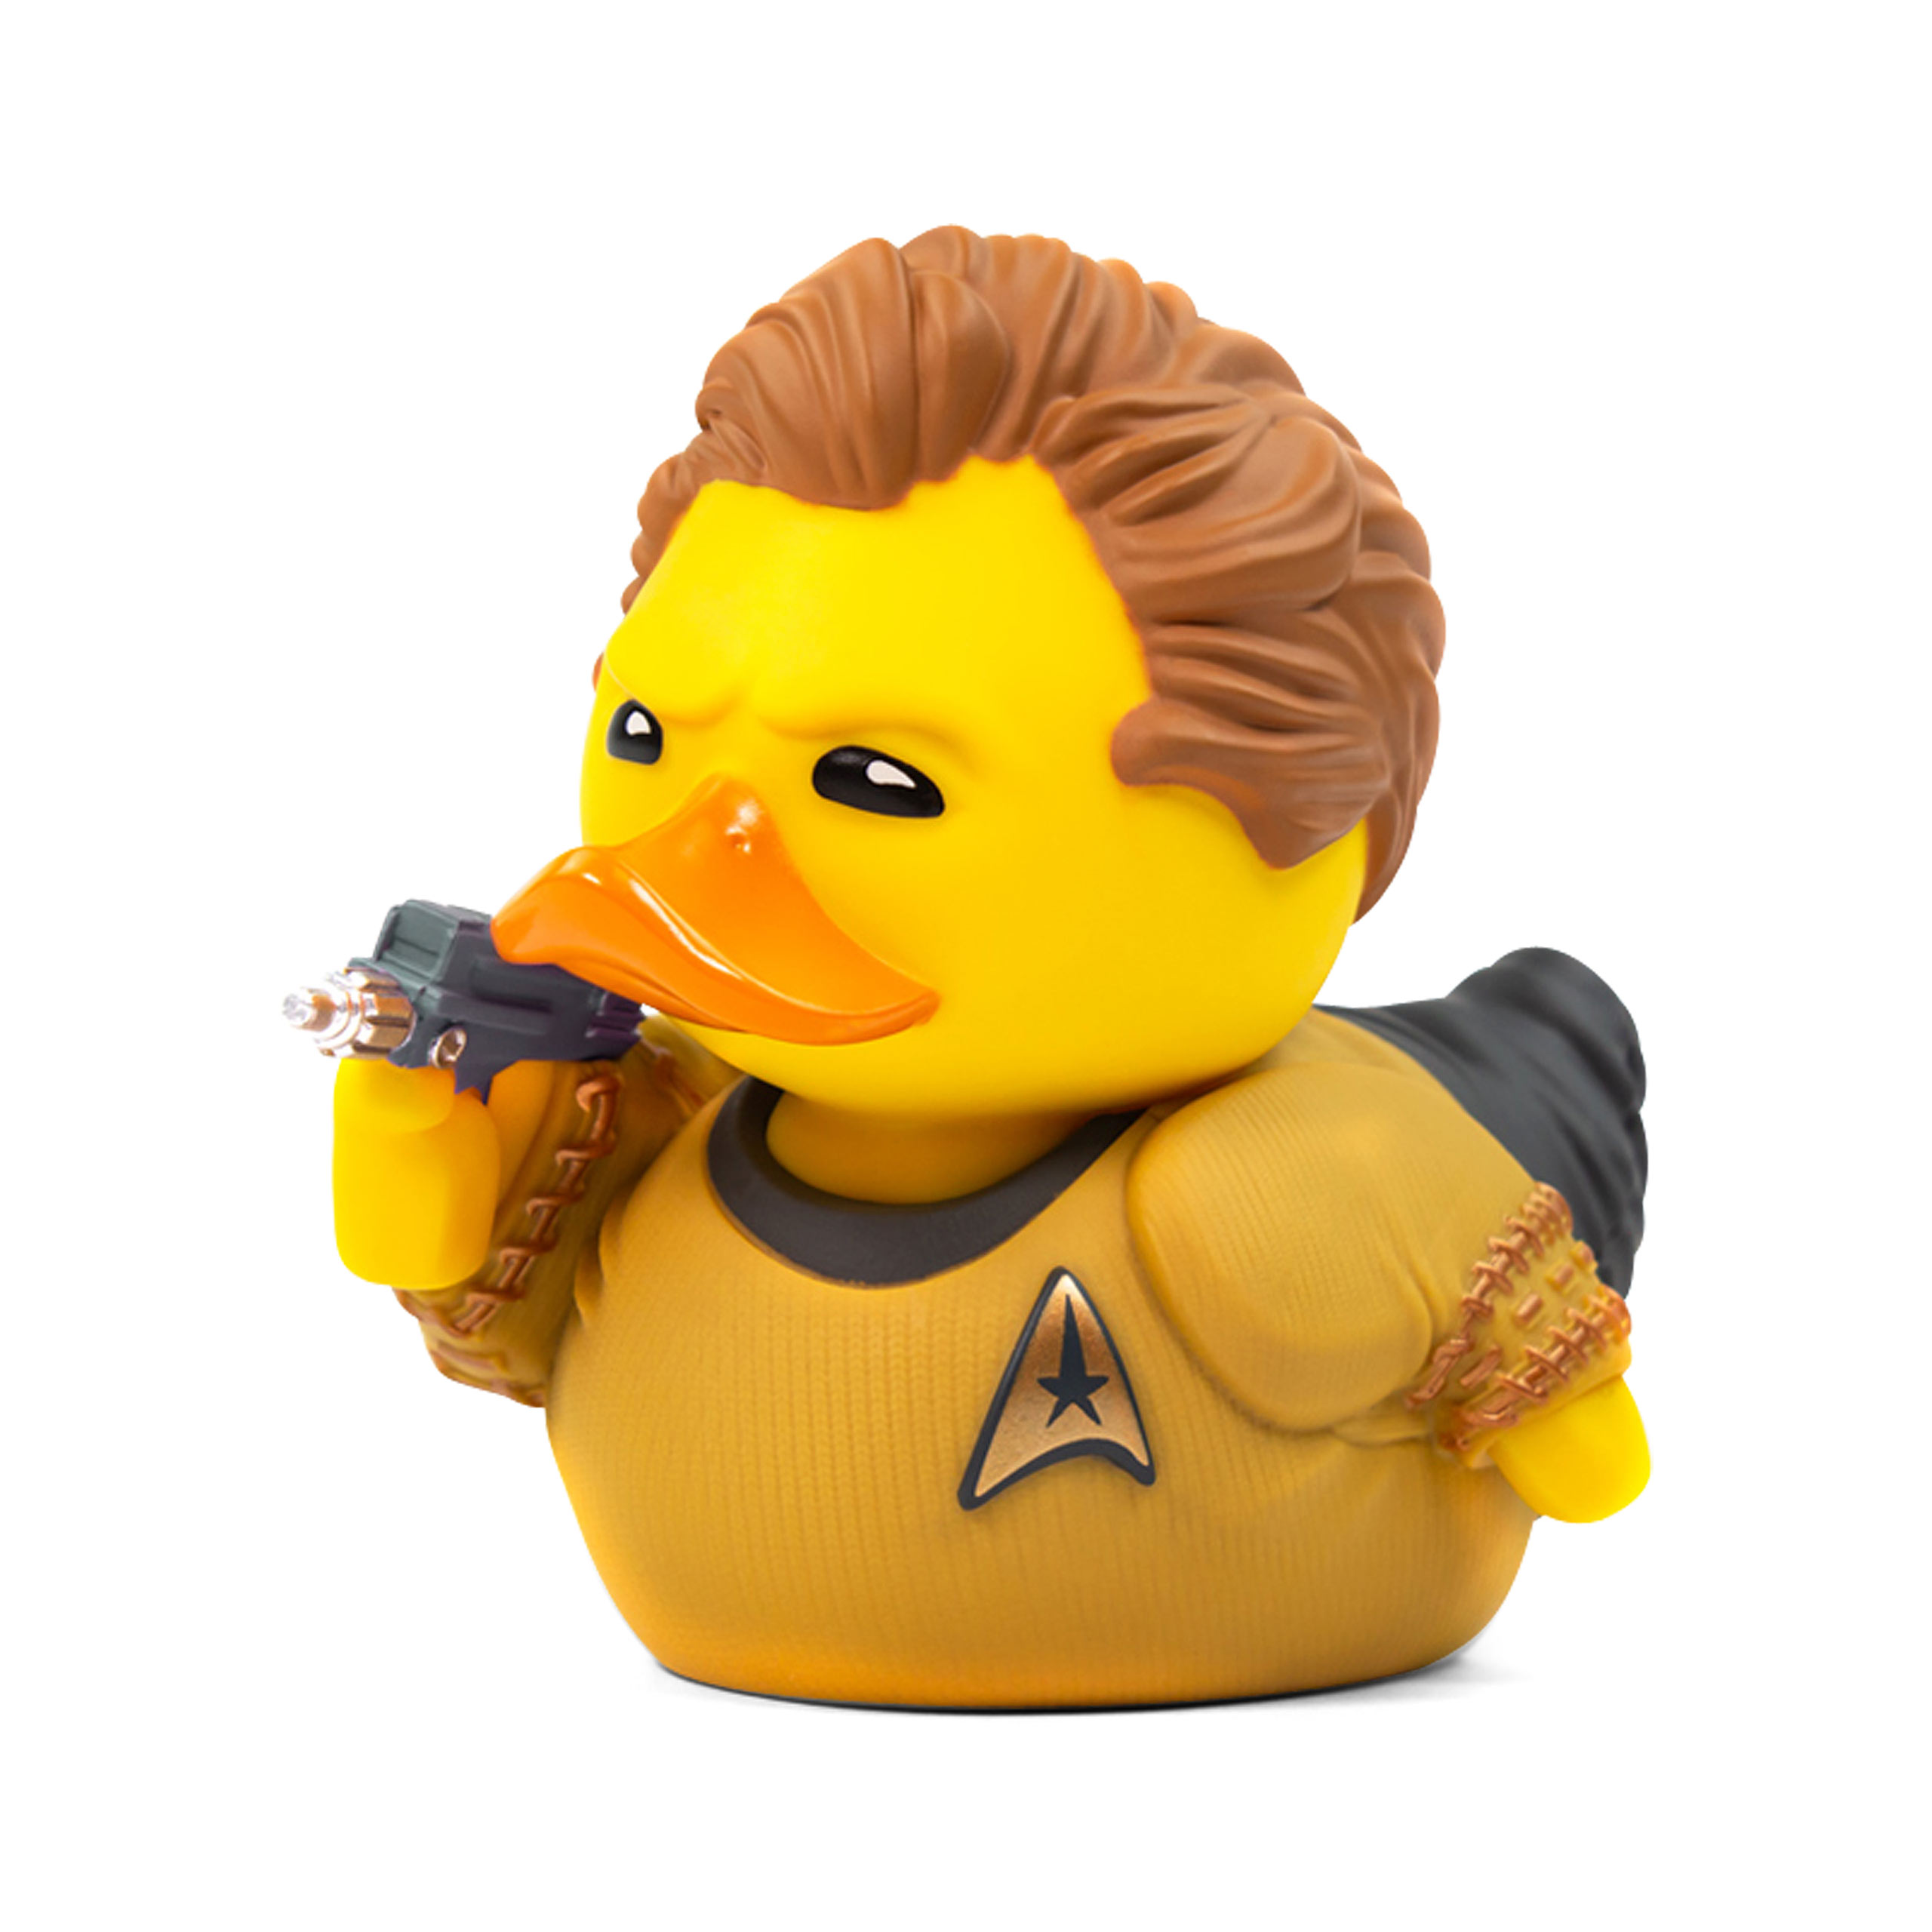 Star Trek - Captain Kirk TUBBZ Deco Duck